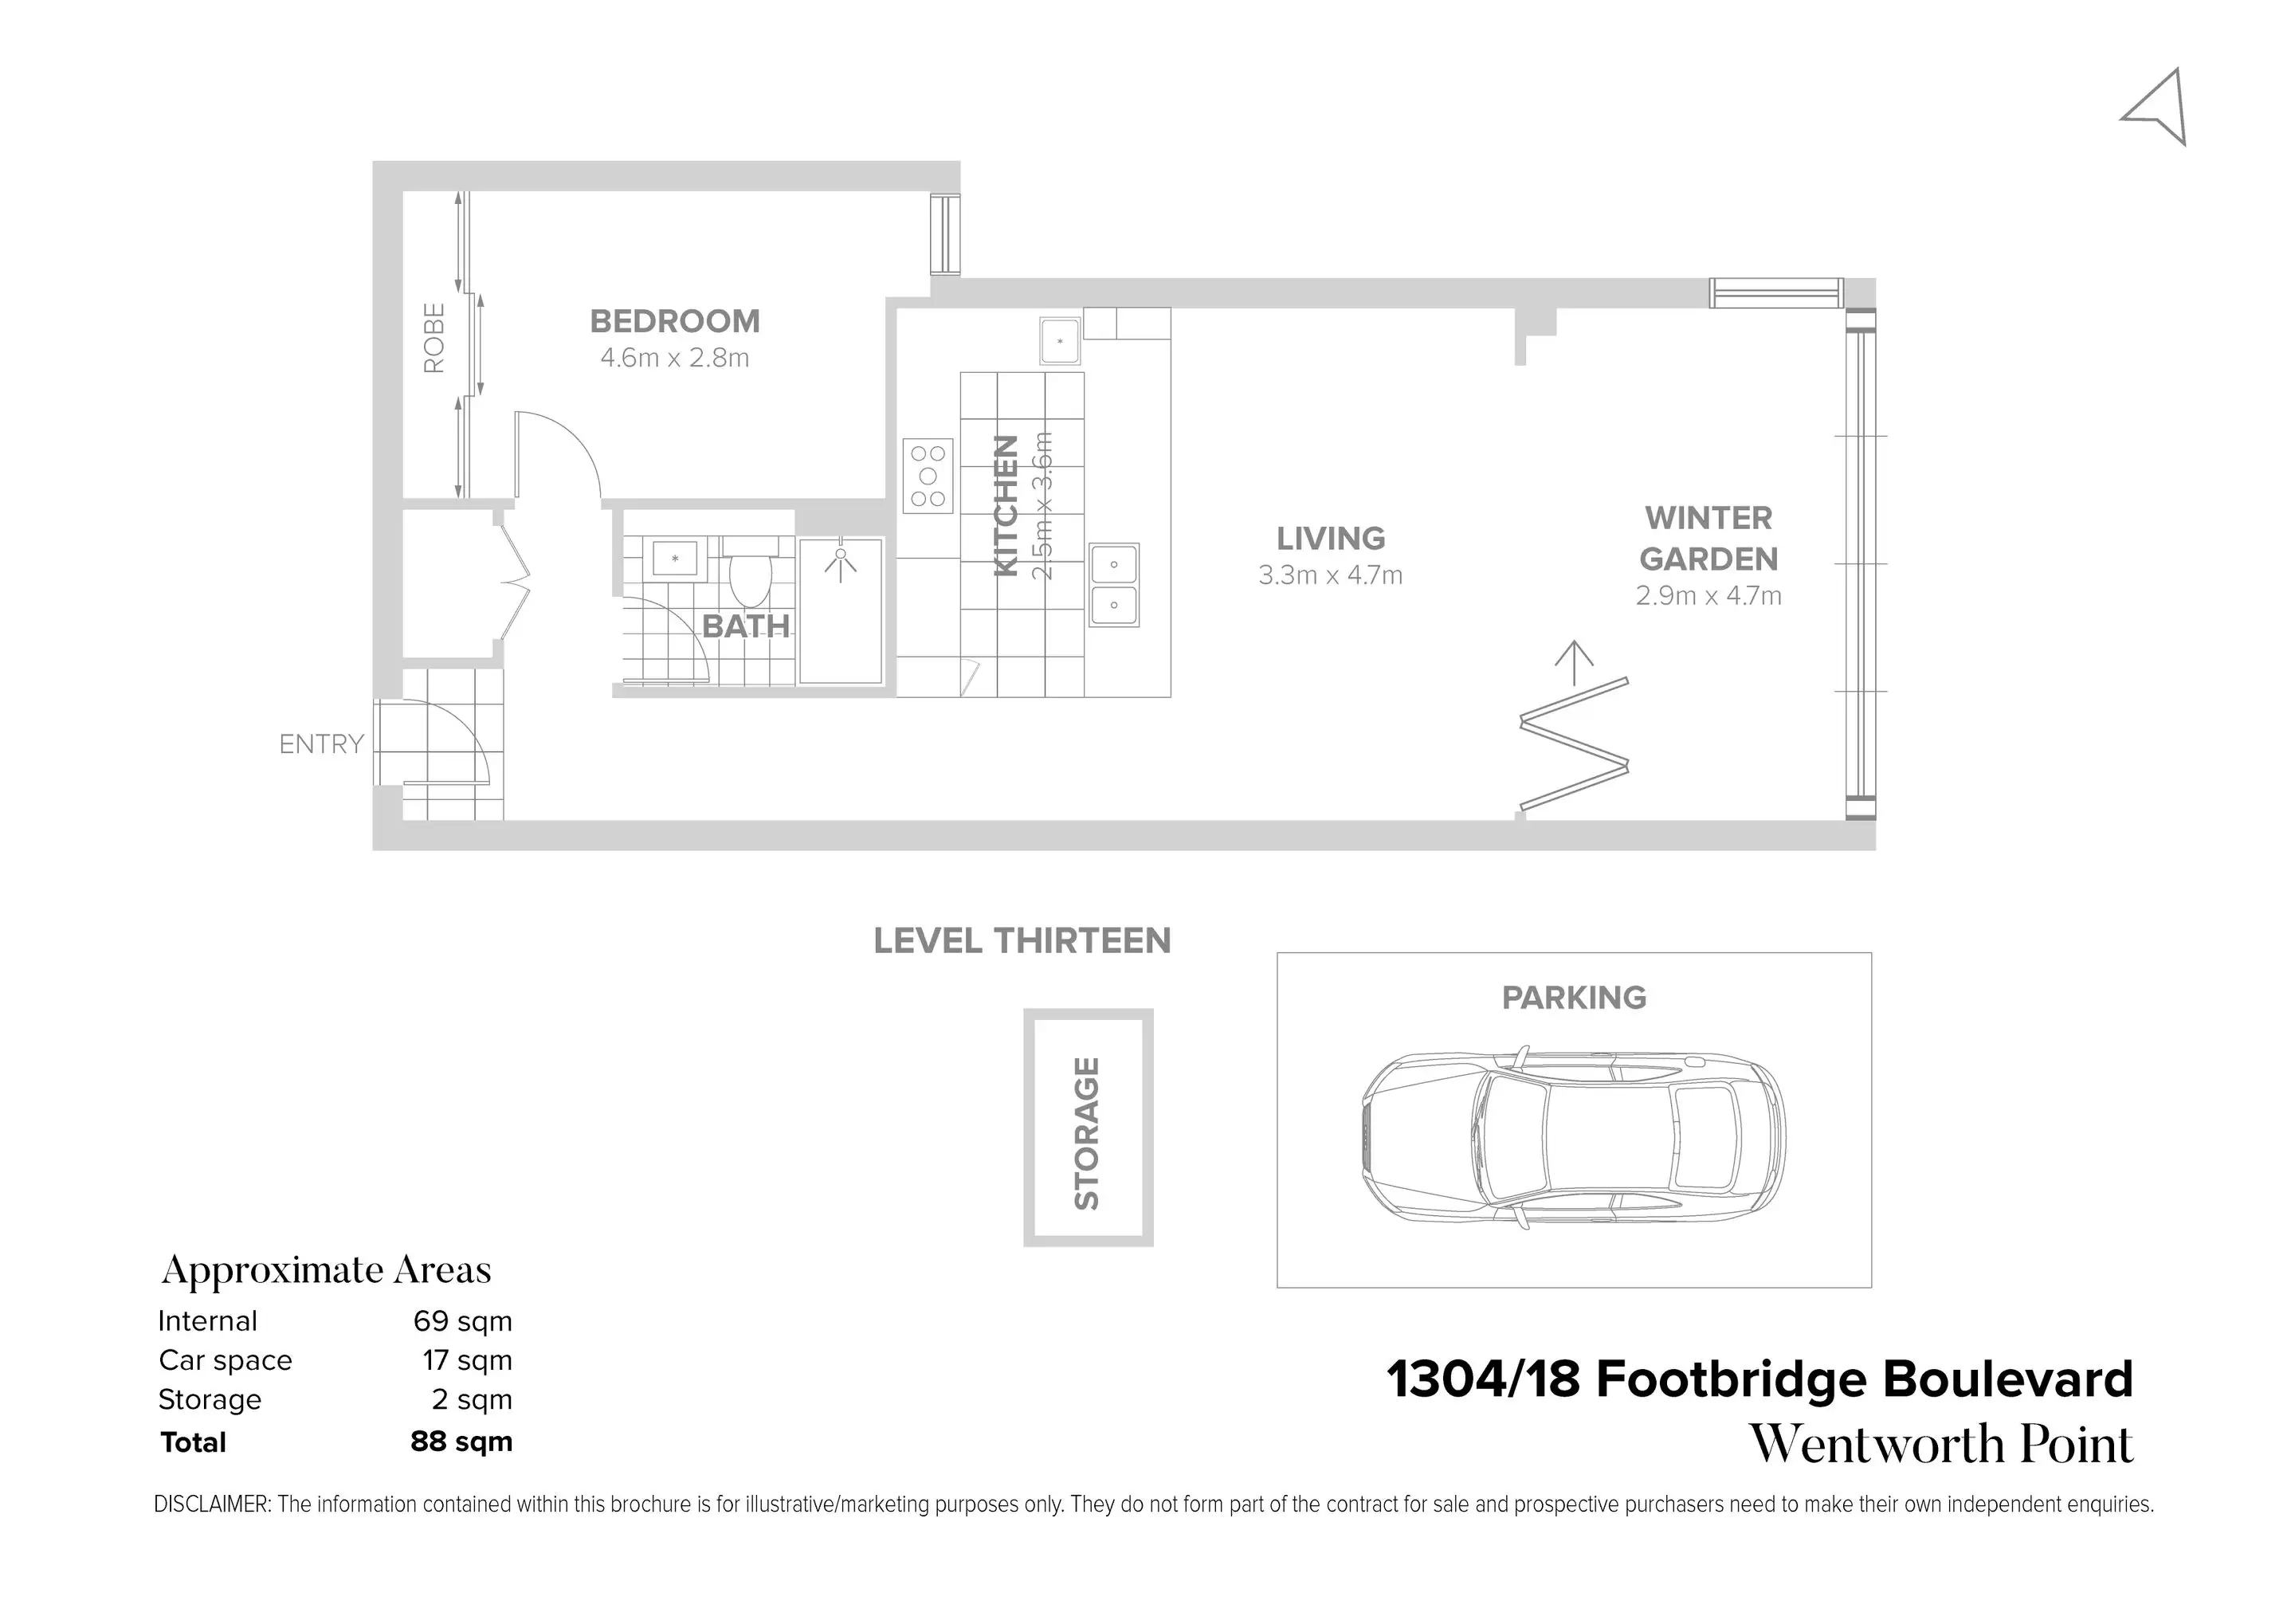 1304/18 Footbridge Boulevard, Wentworth Point Sold by Chidiac Realty - floorplan